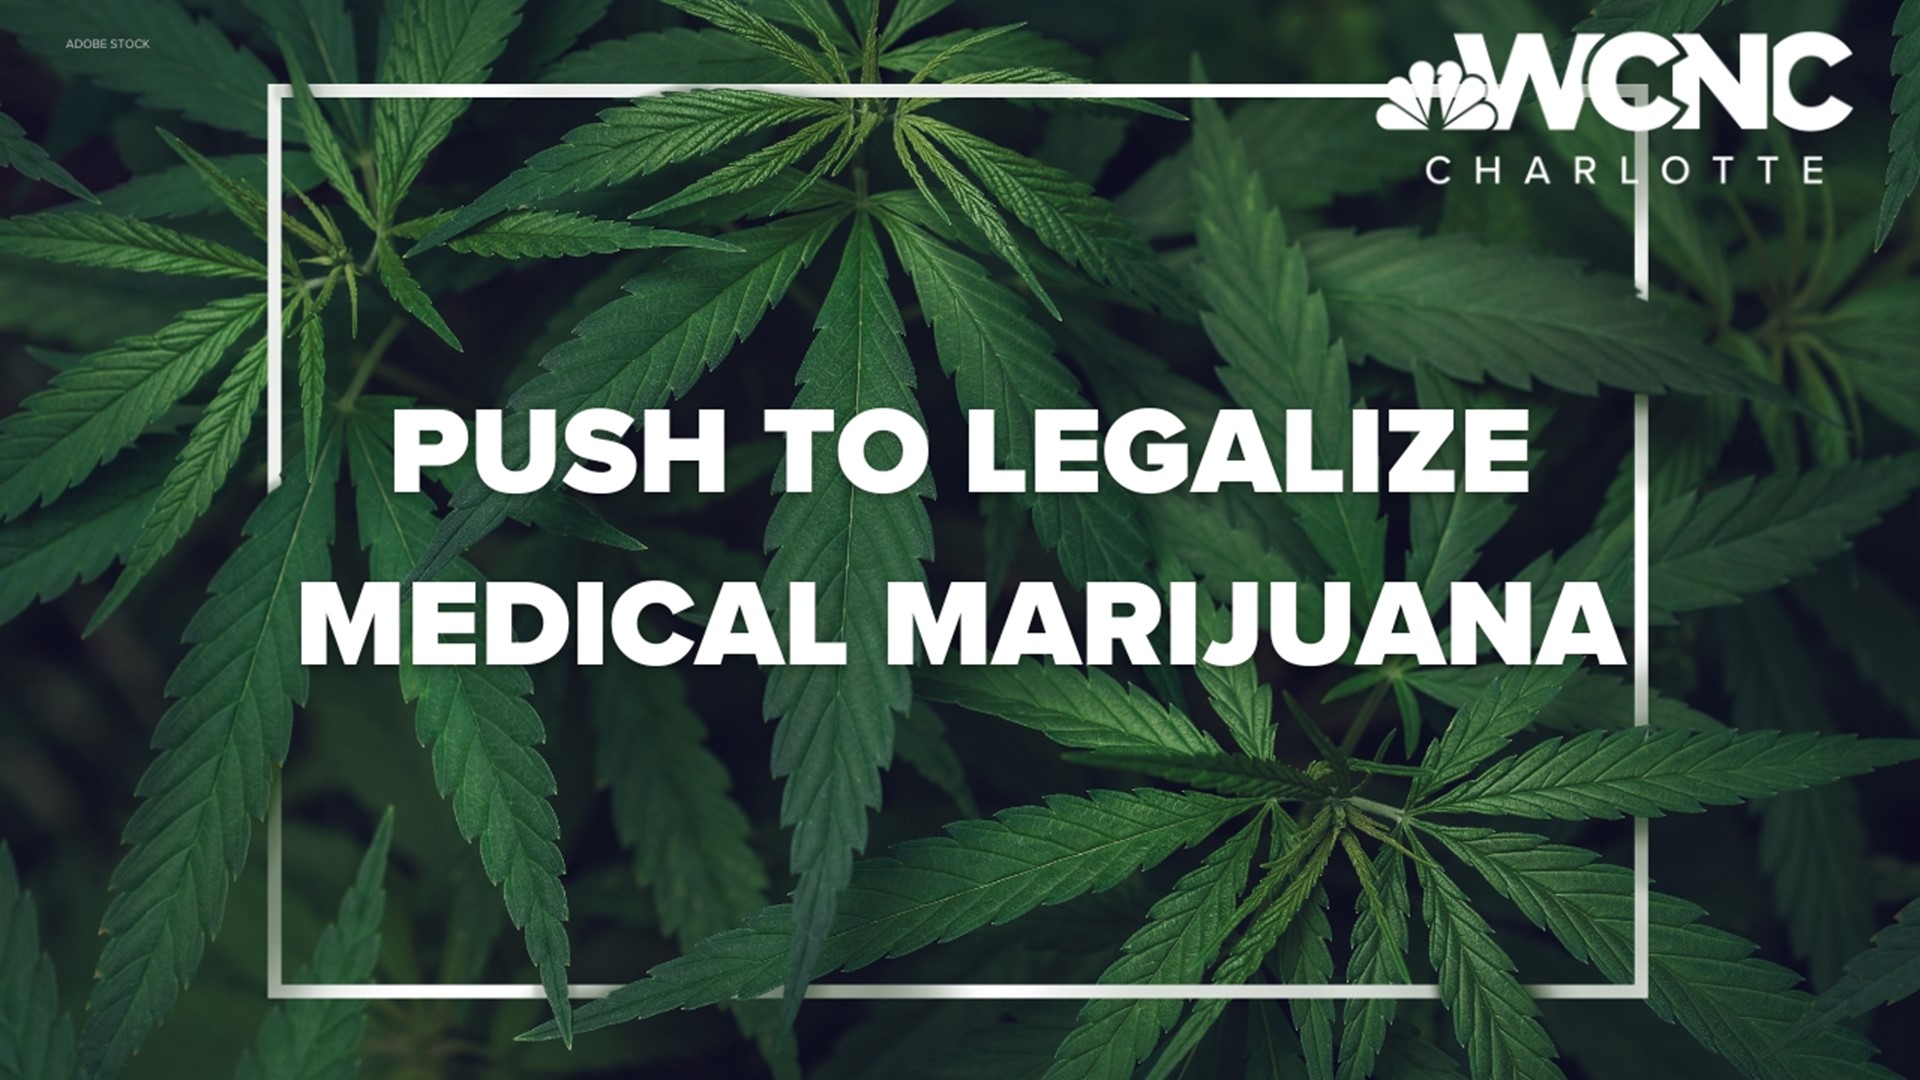 The push to legalize medical marijuana in North Carolina is underway again.